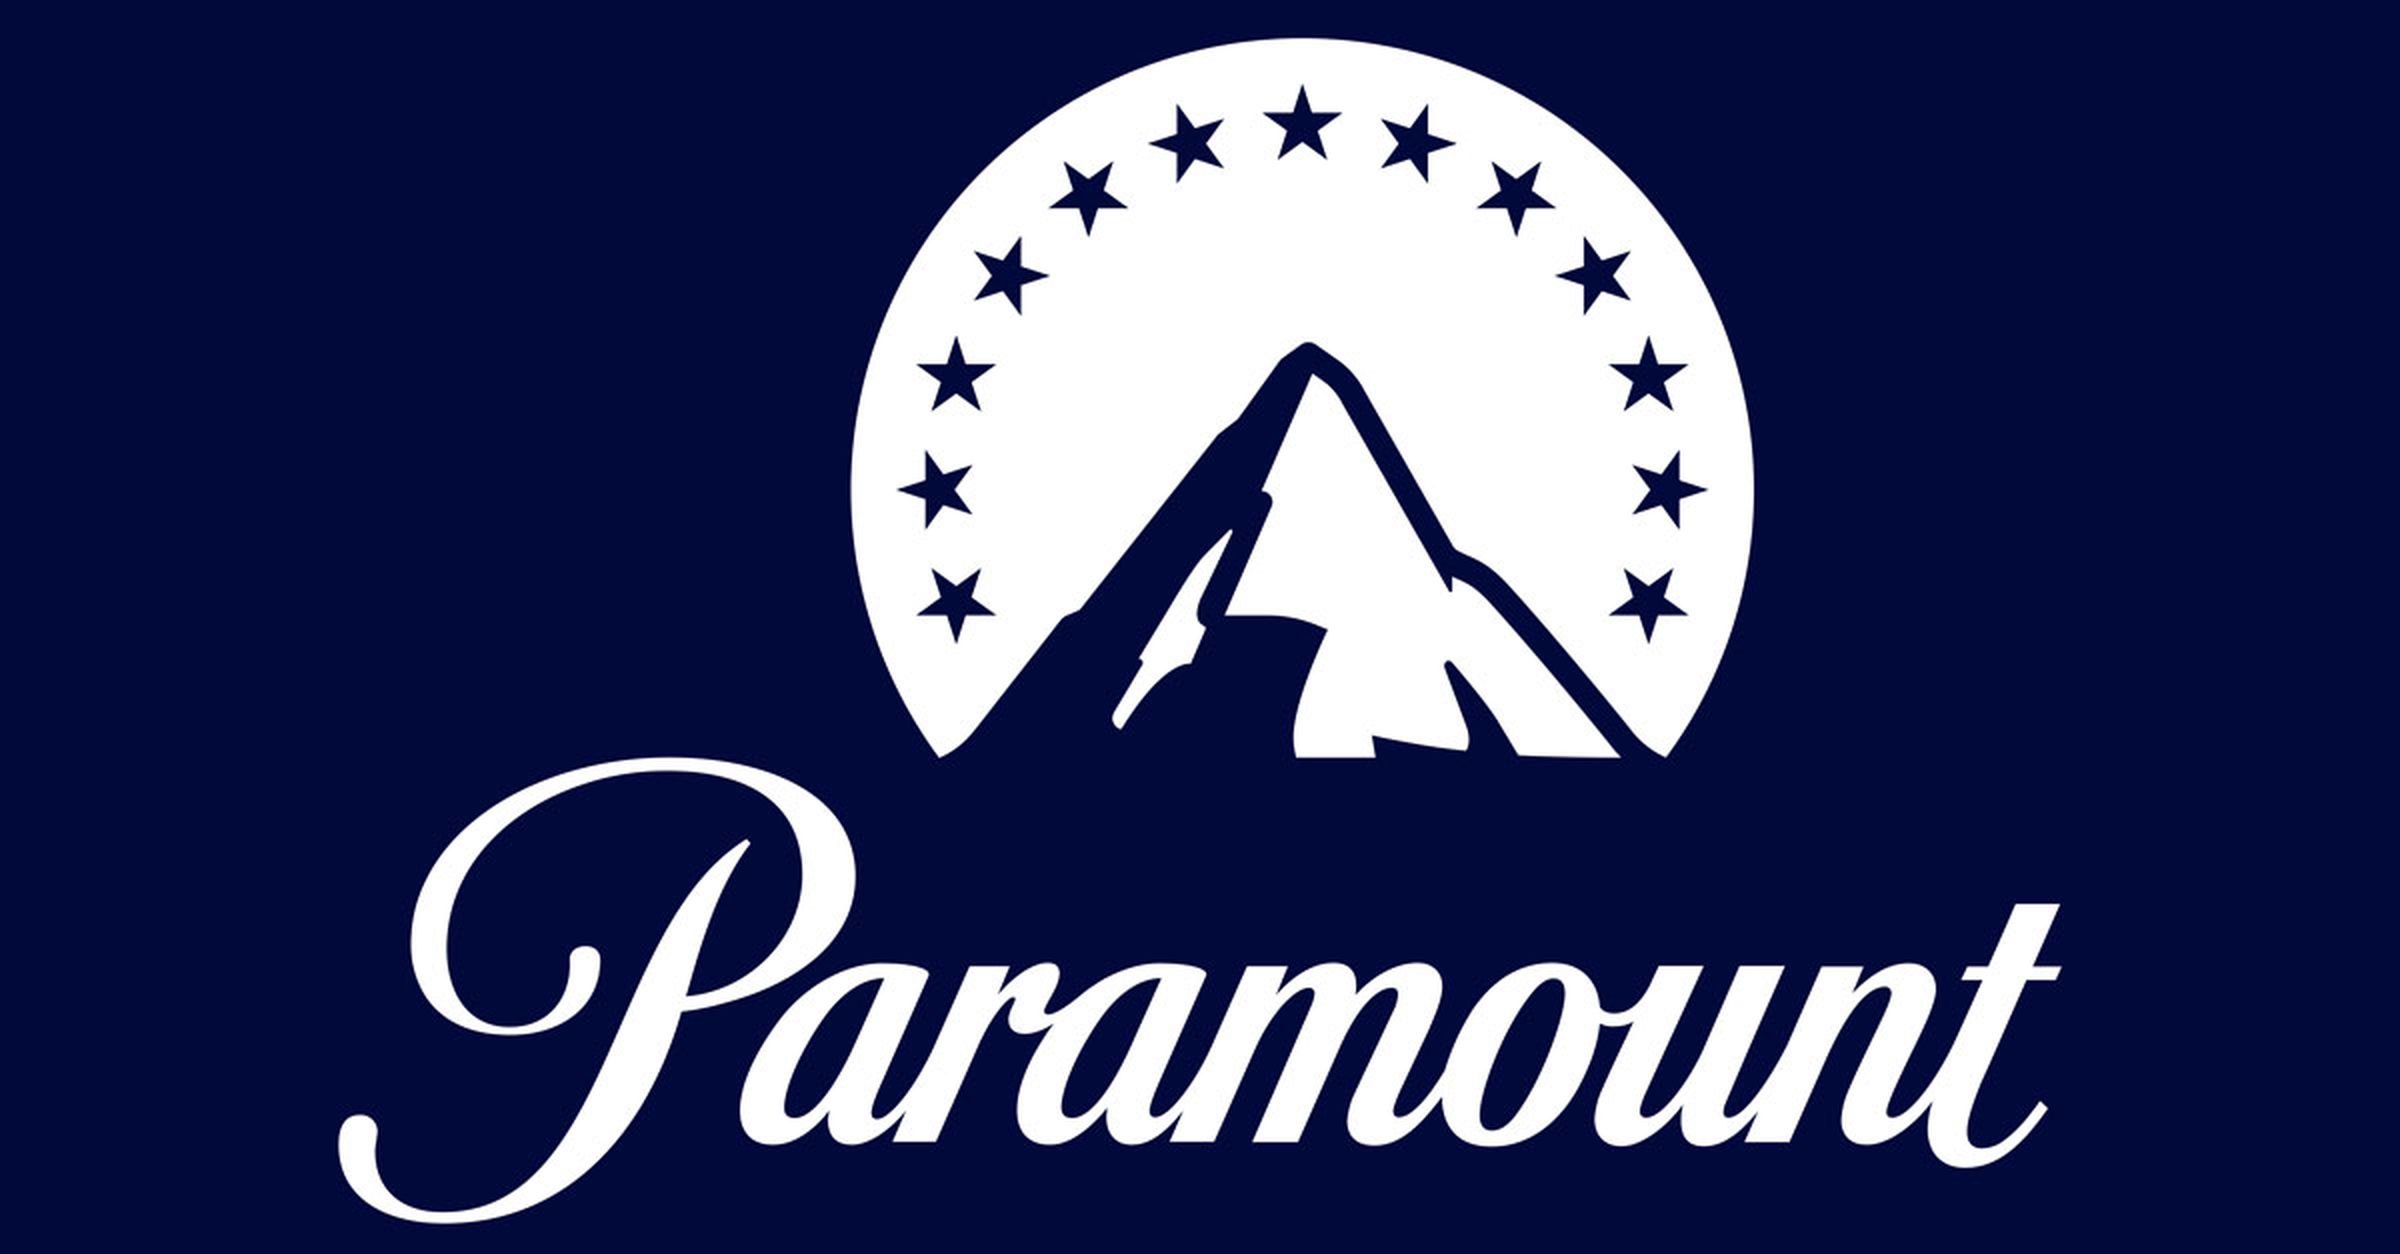 One of Paramount’s standard logos.